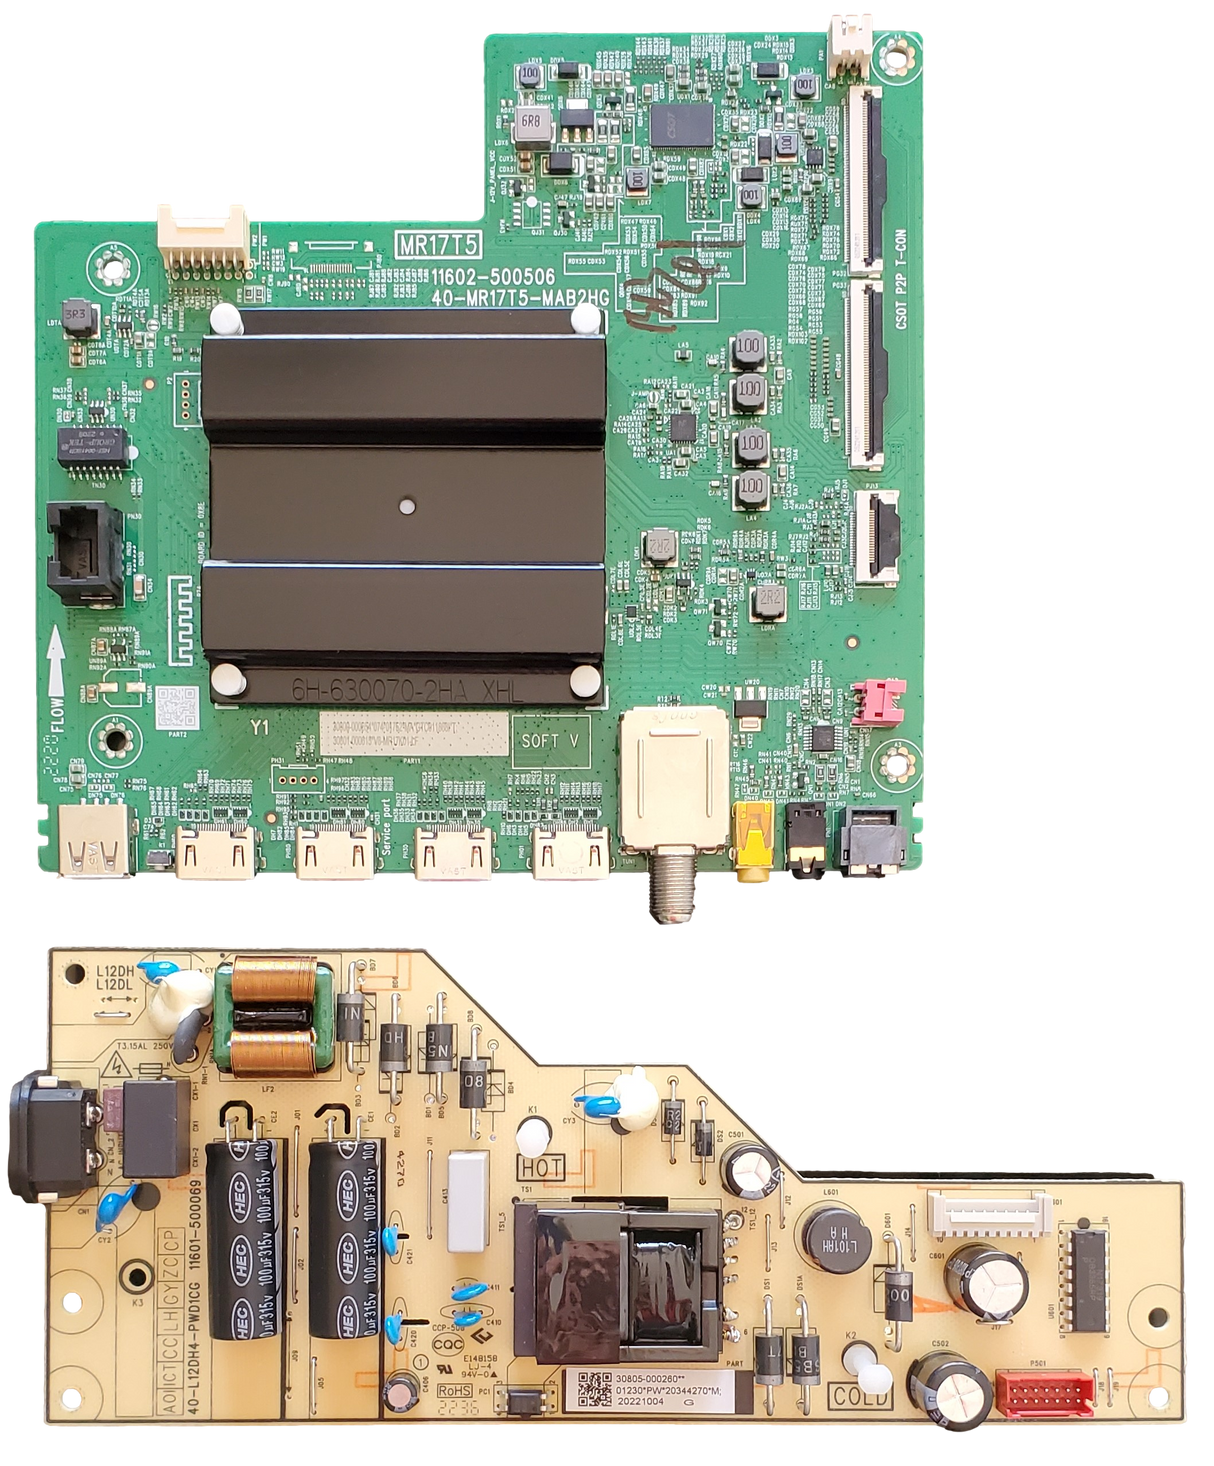 58S455 TCL TV Repair Kit, 30800-000654 Main Board, 30805-000260 Power Supply, 58S455